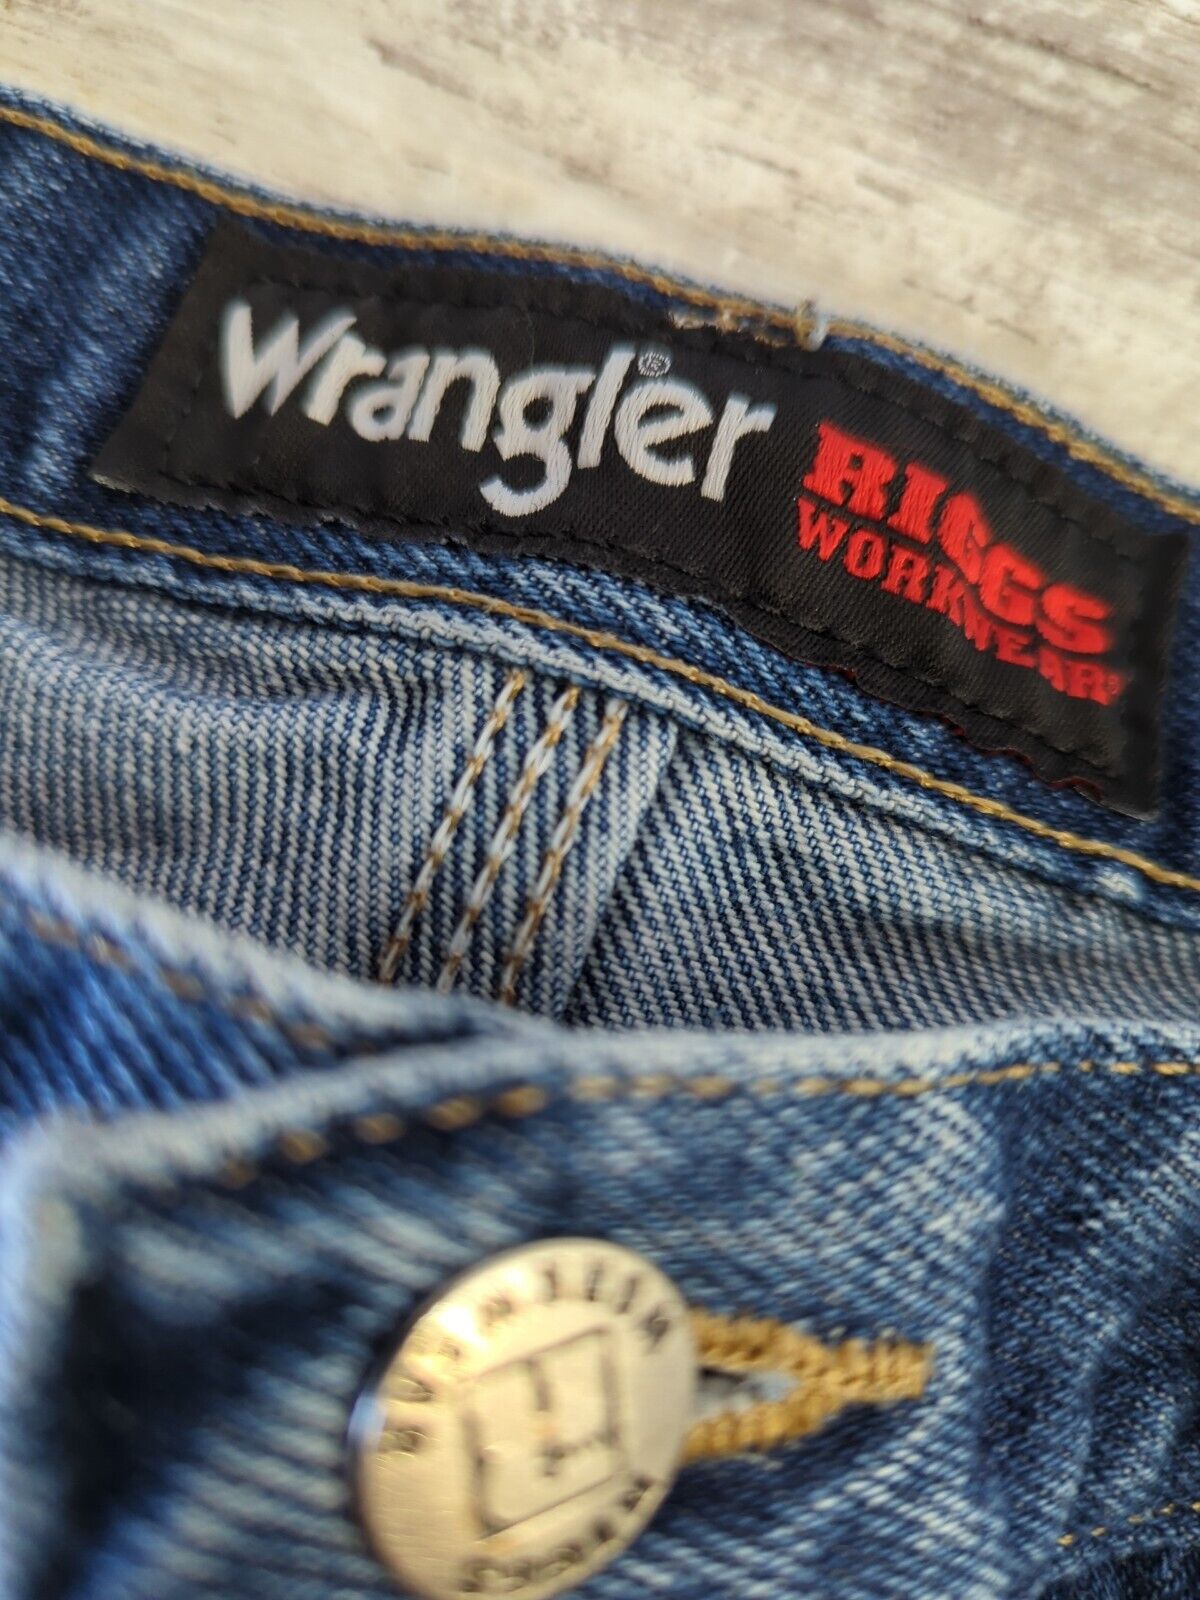 Wrangler Rigs Work Wear Denim Jeans 38x36 - image 6